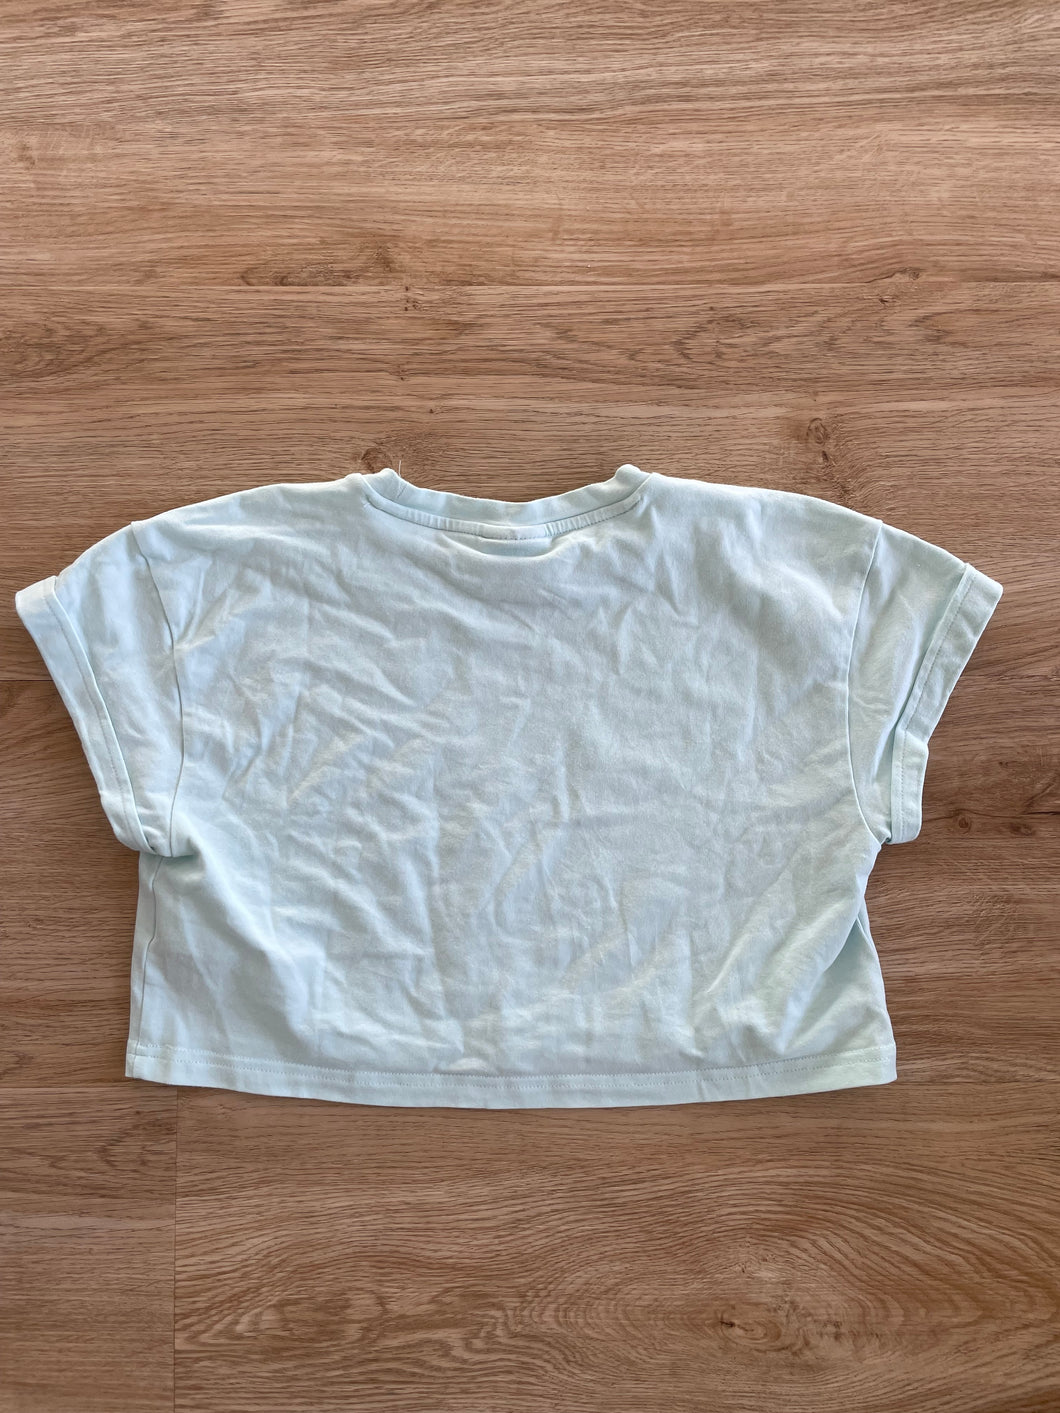 Teveo ~ Oversized T-Shirt (S)